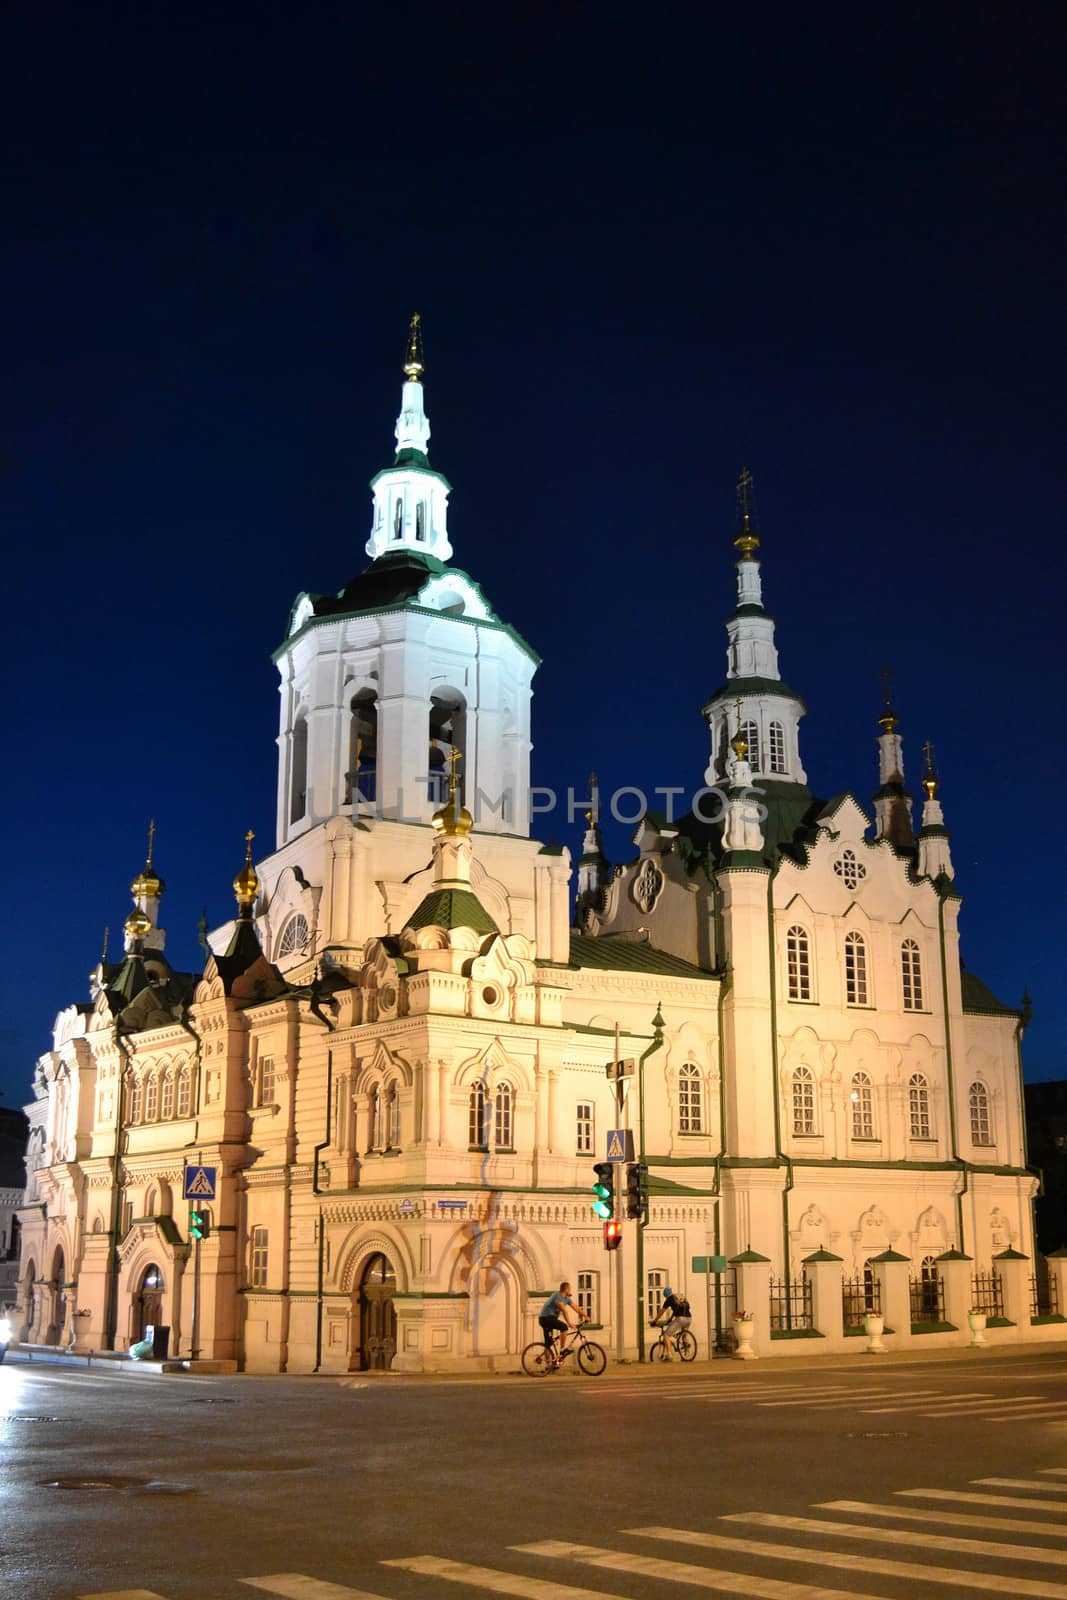 Spassky church in night-time lighting. Tyumen, Russia.